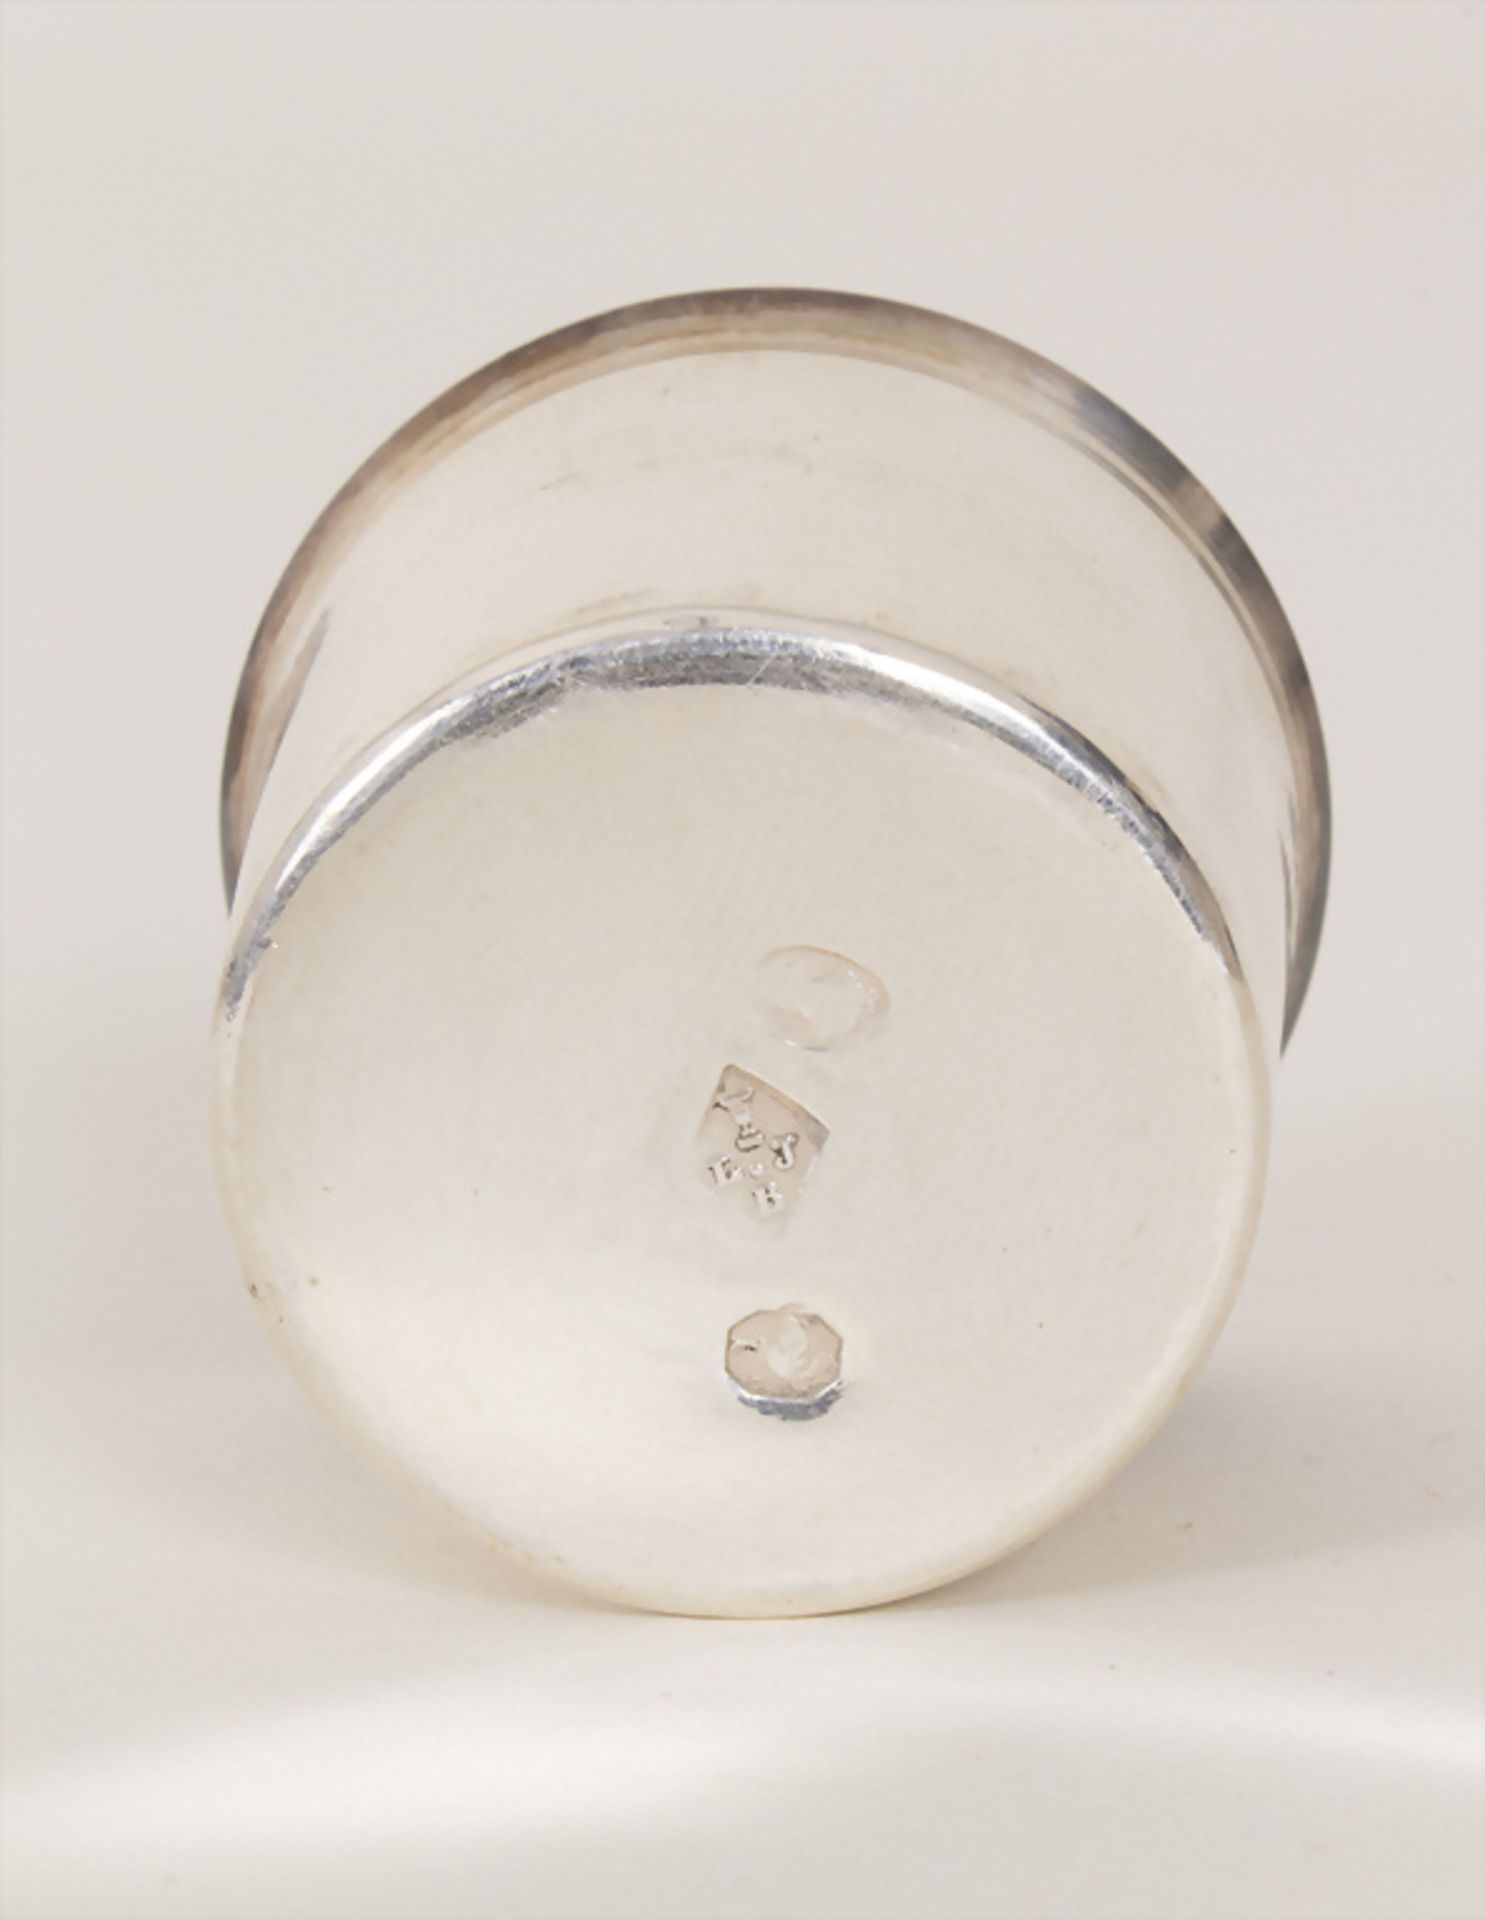 7 Miniatur Empire Becher / 7 miniature Empire silver beaker, Louis-Jacques Berger, Paris, um 1810 - Image 3 of 7